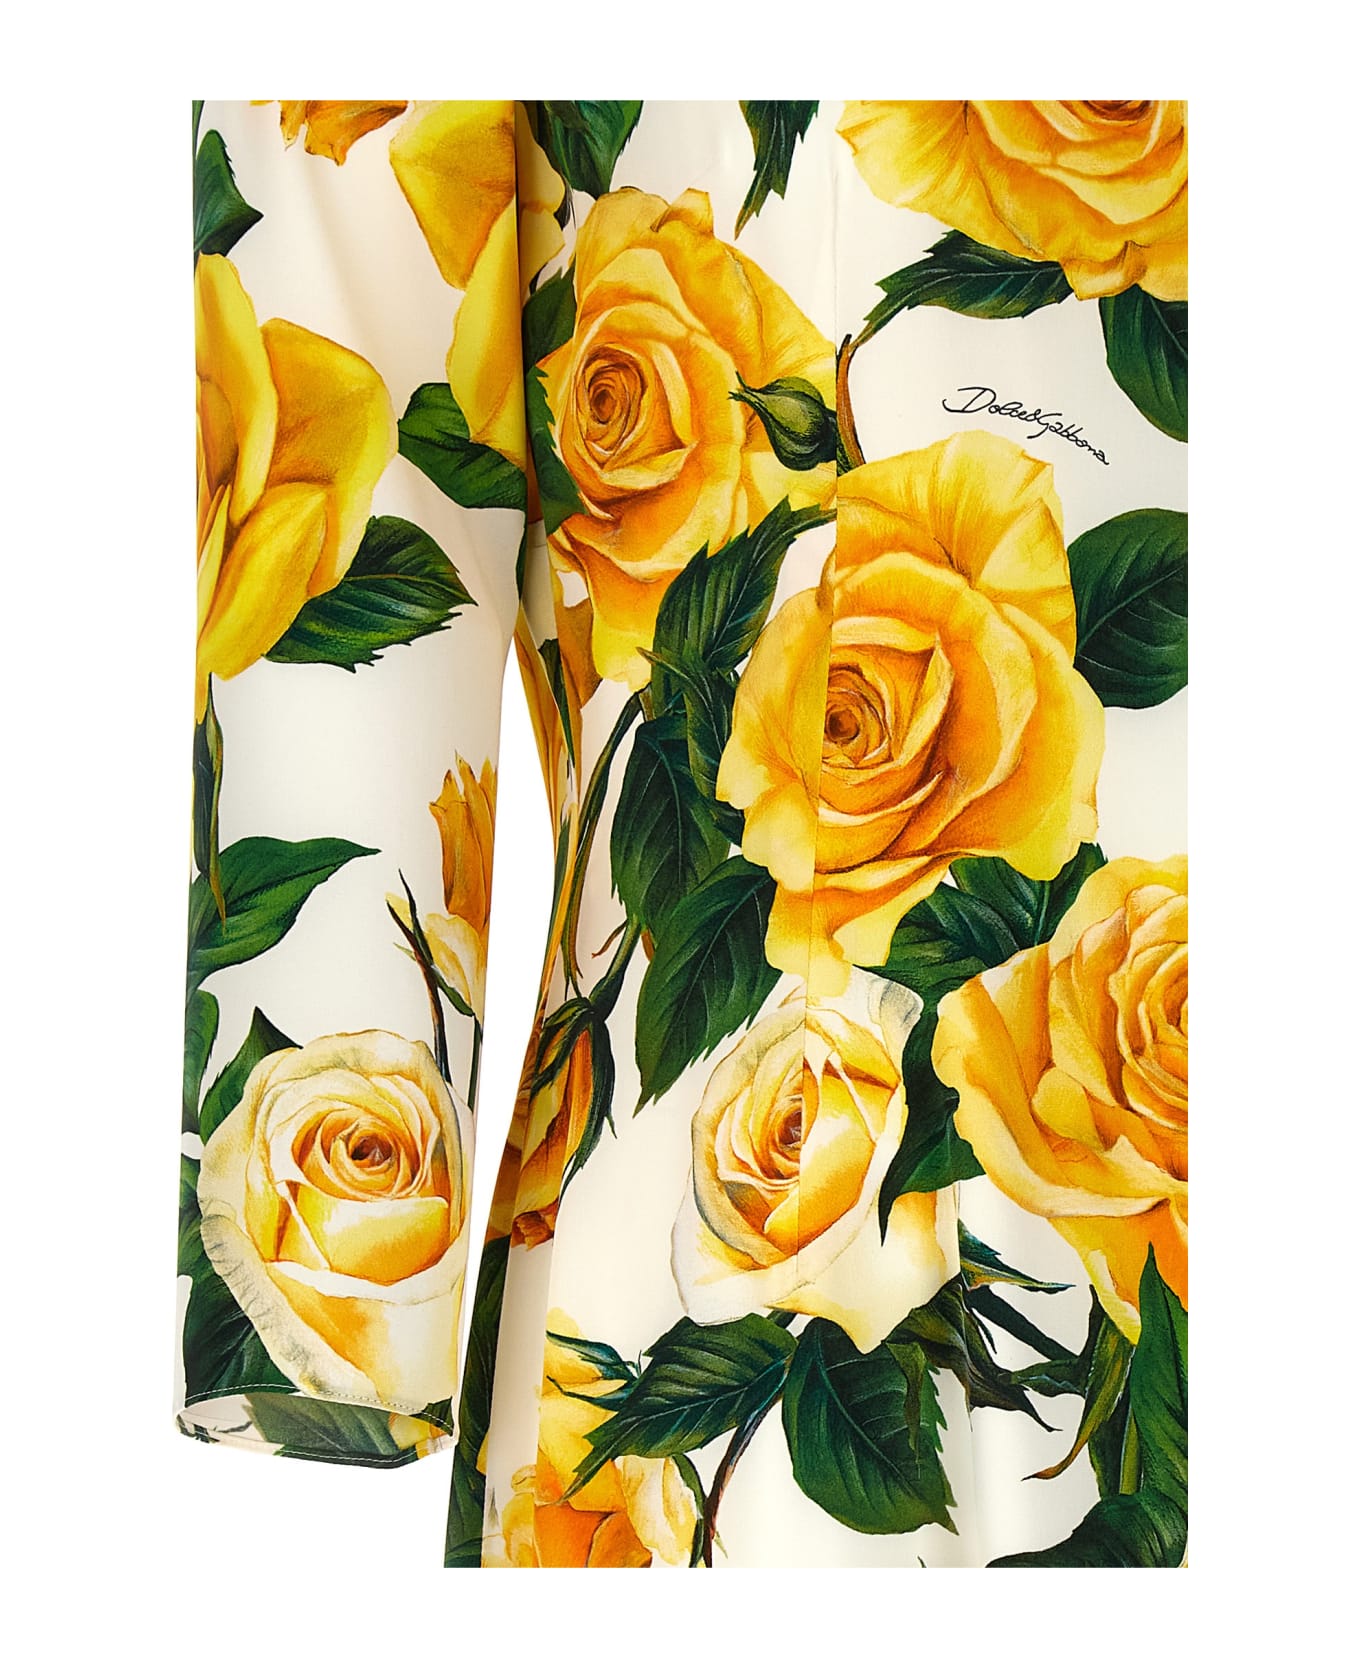 Dolce & Gabbana 'rose Gialle' Midi Dress - Multicolor ワンピース＆ドレス